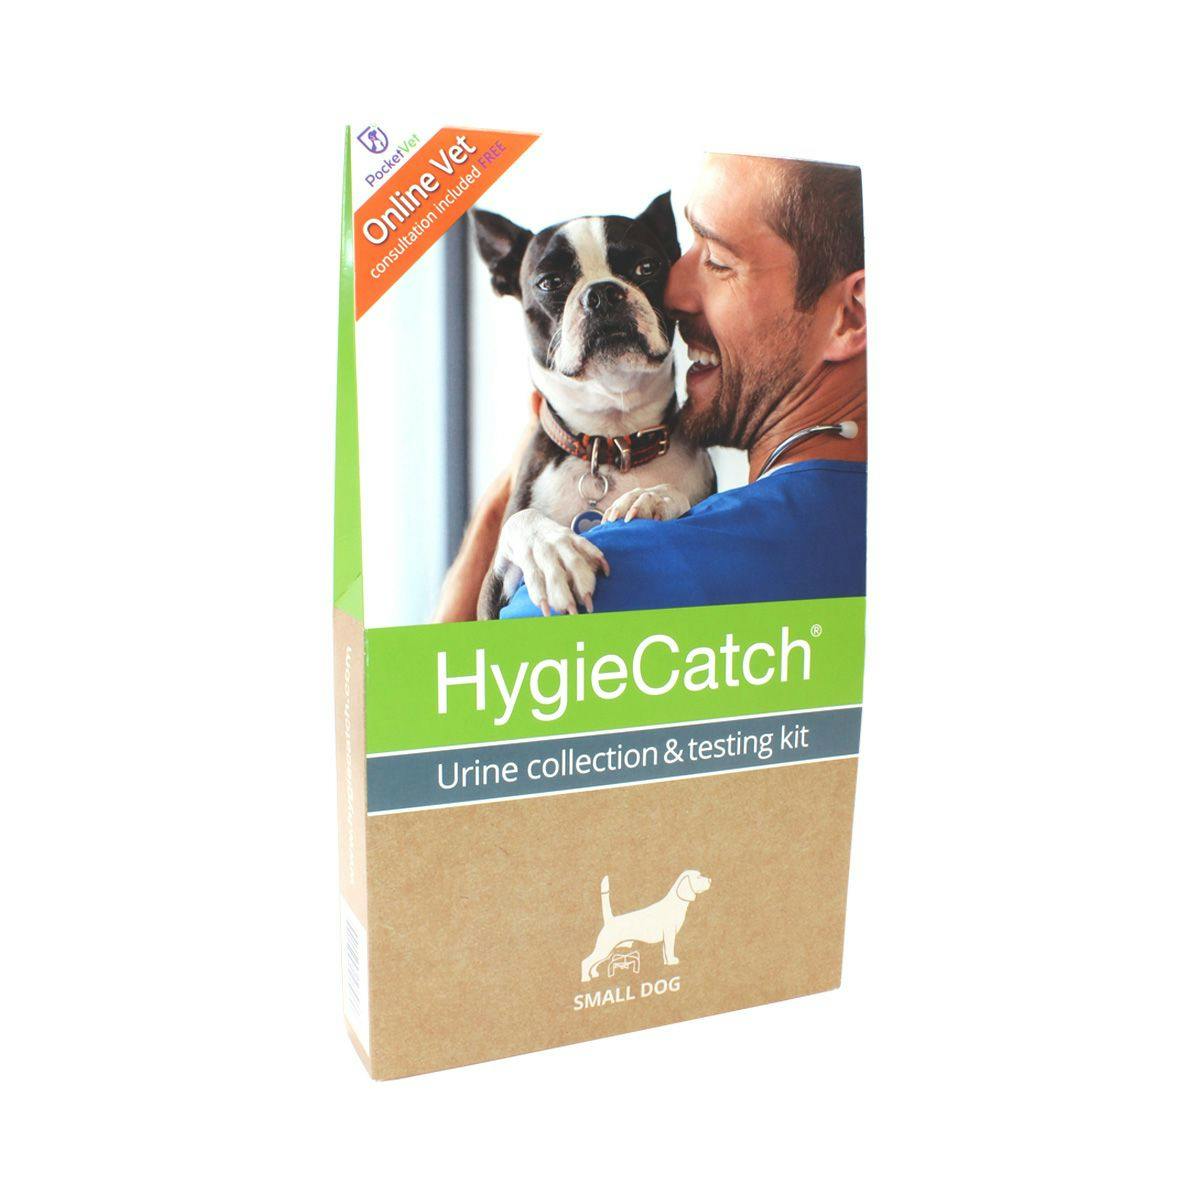 HygieCatch Dog Urine collection & testing kit